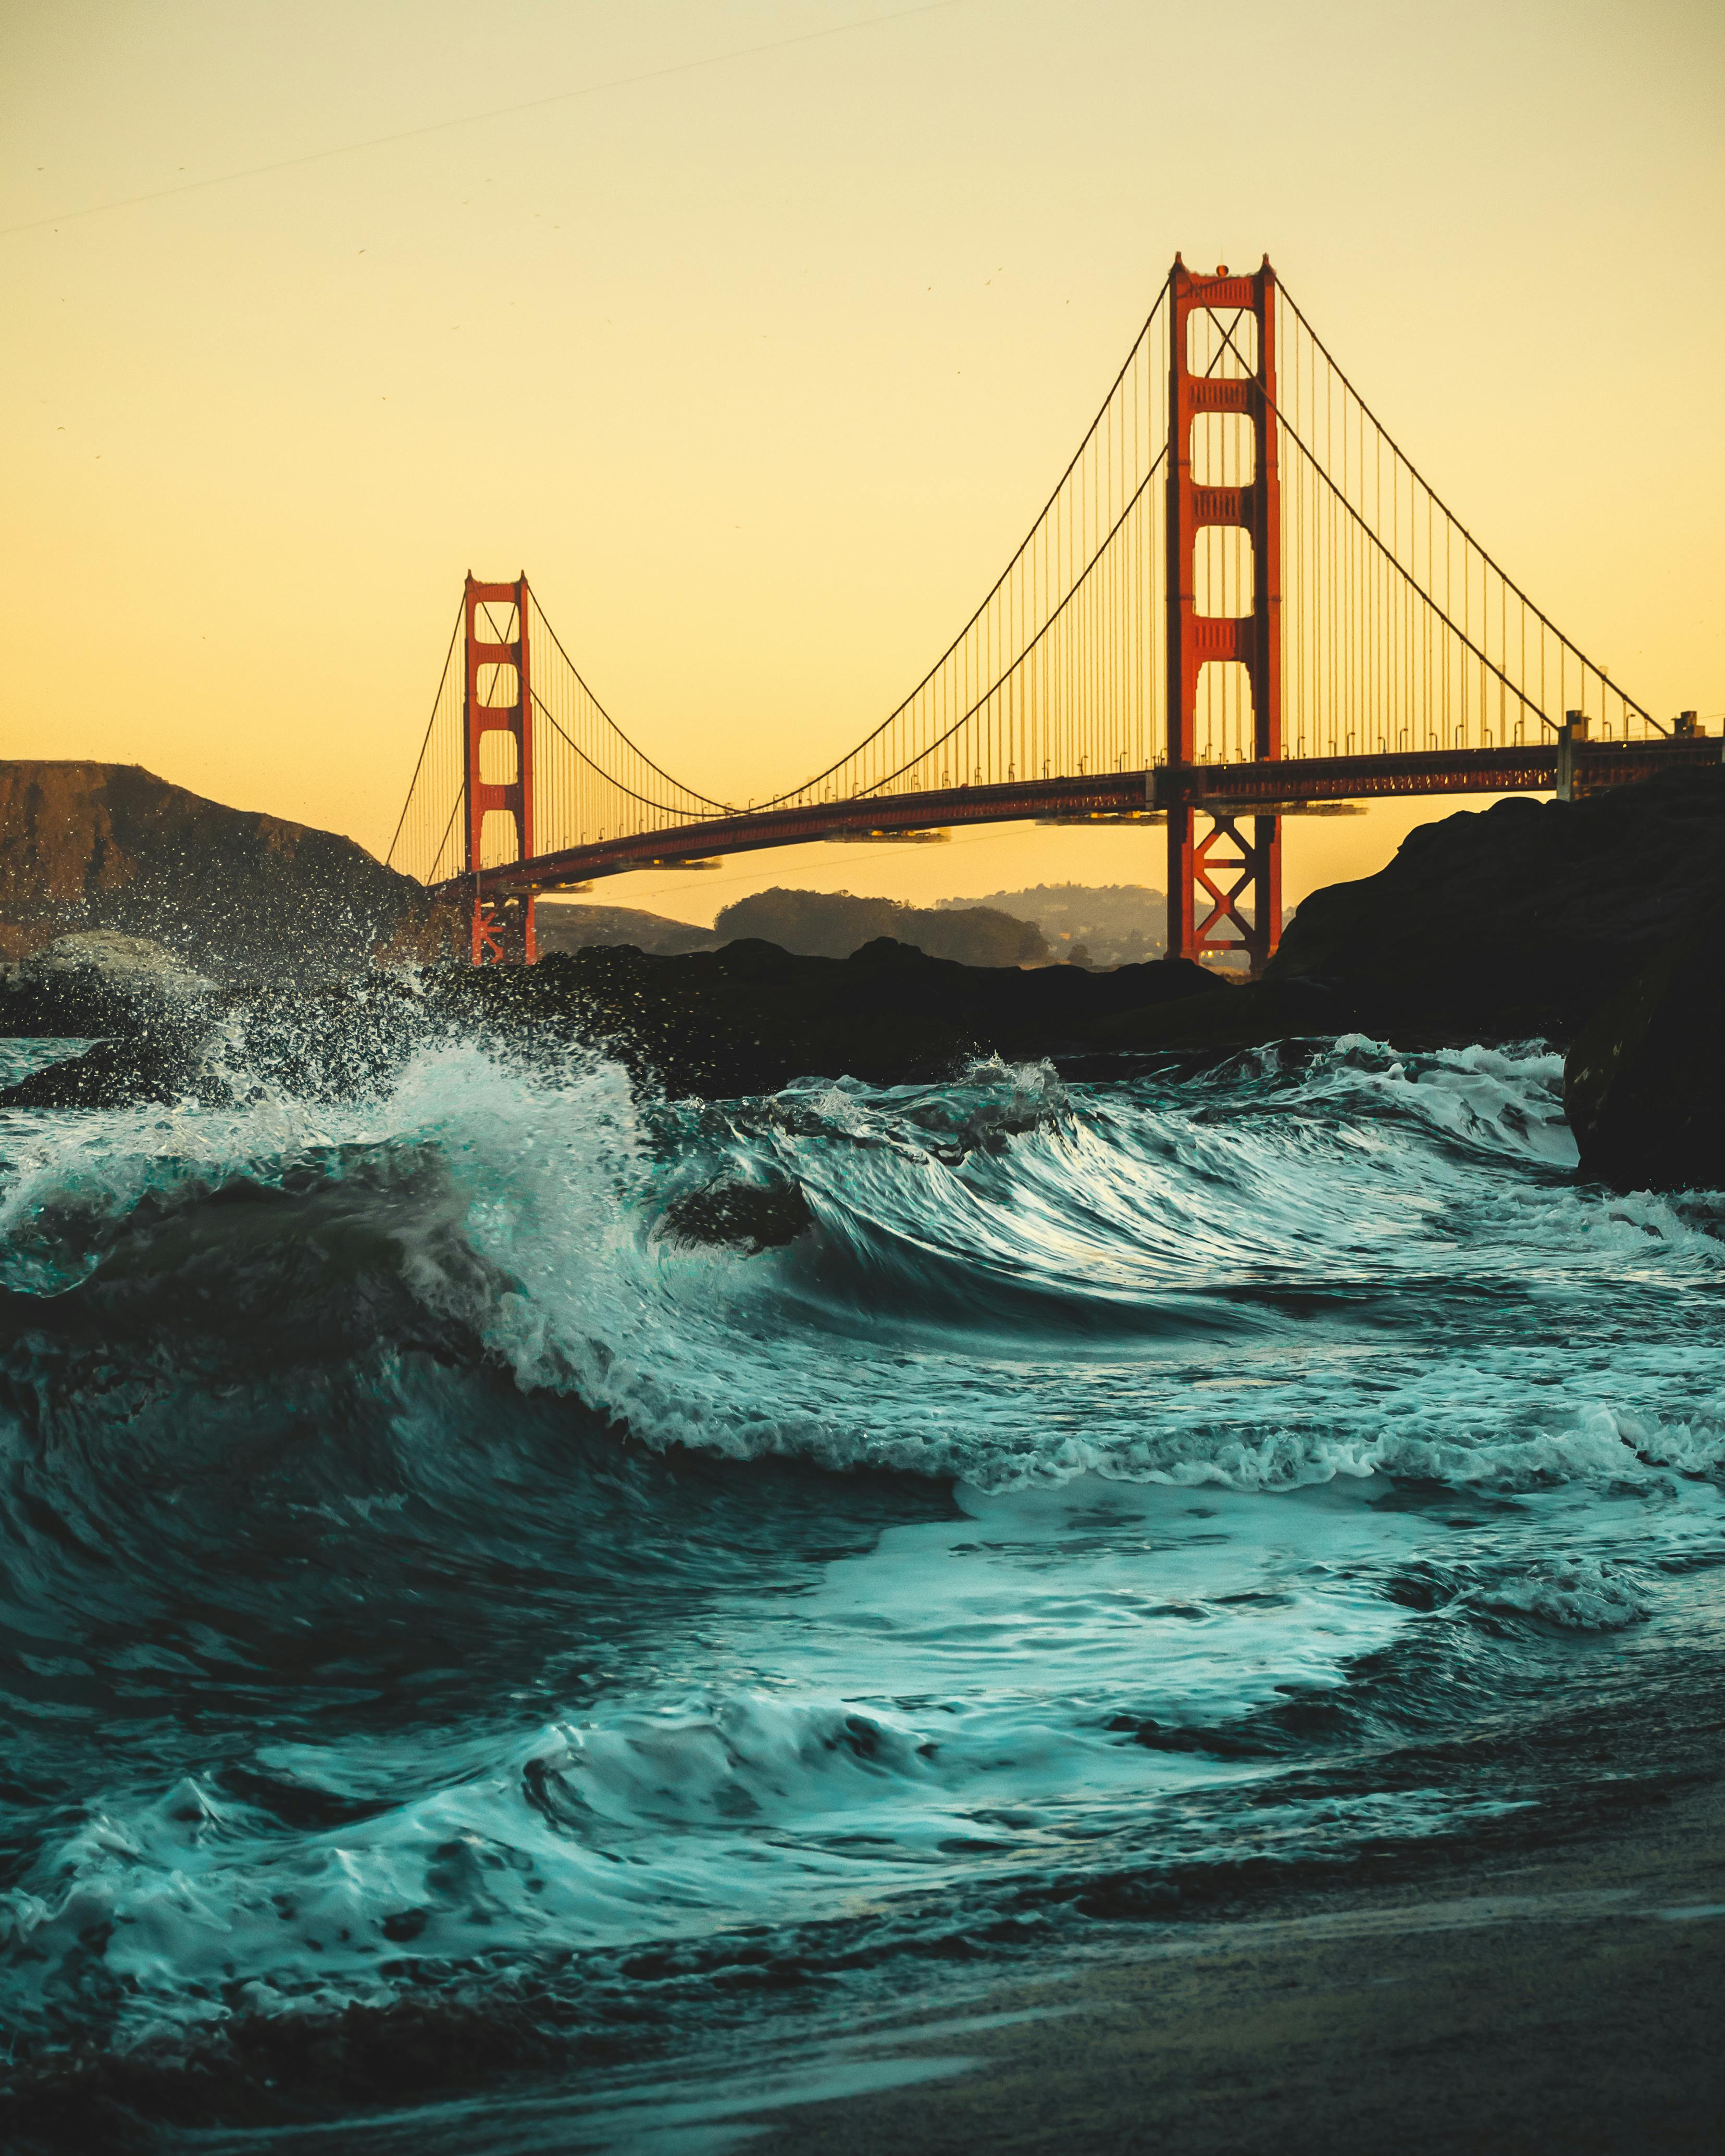 High resolution photos of the Golden Gate Bridge - VAST